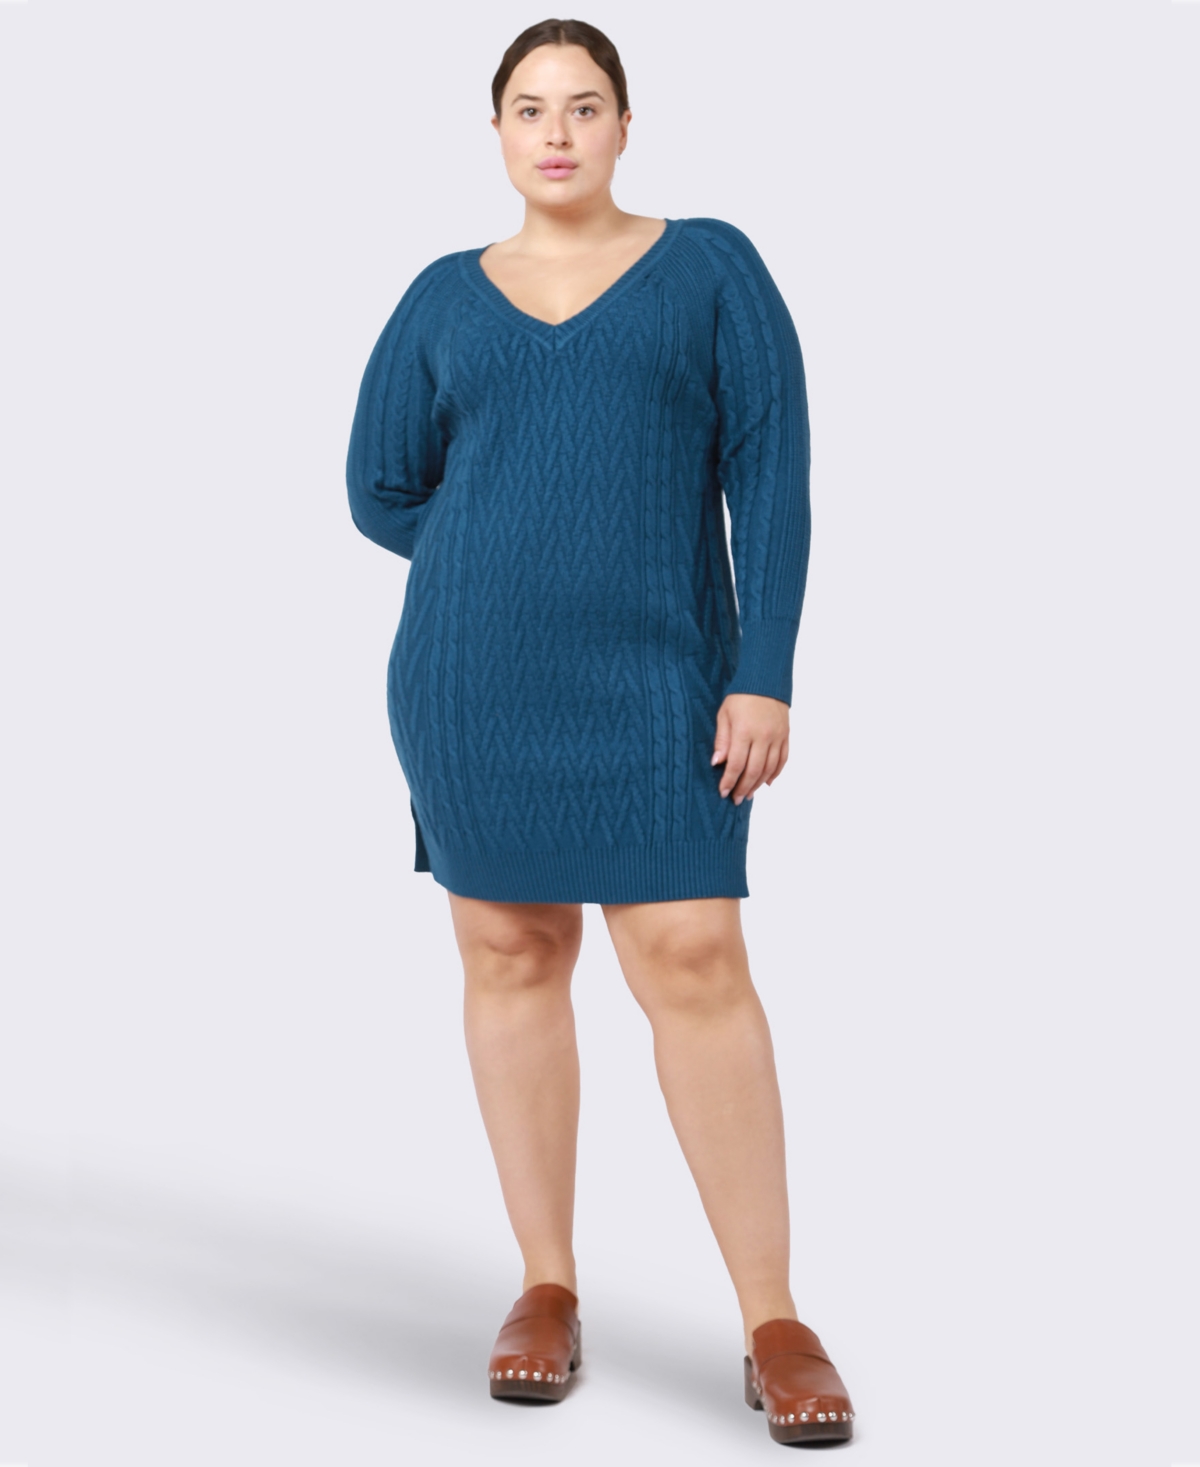 Black Tape Trendy Plus Size Cable-Knit Sweater Dress